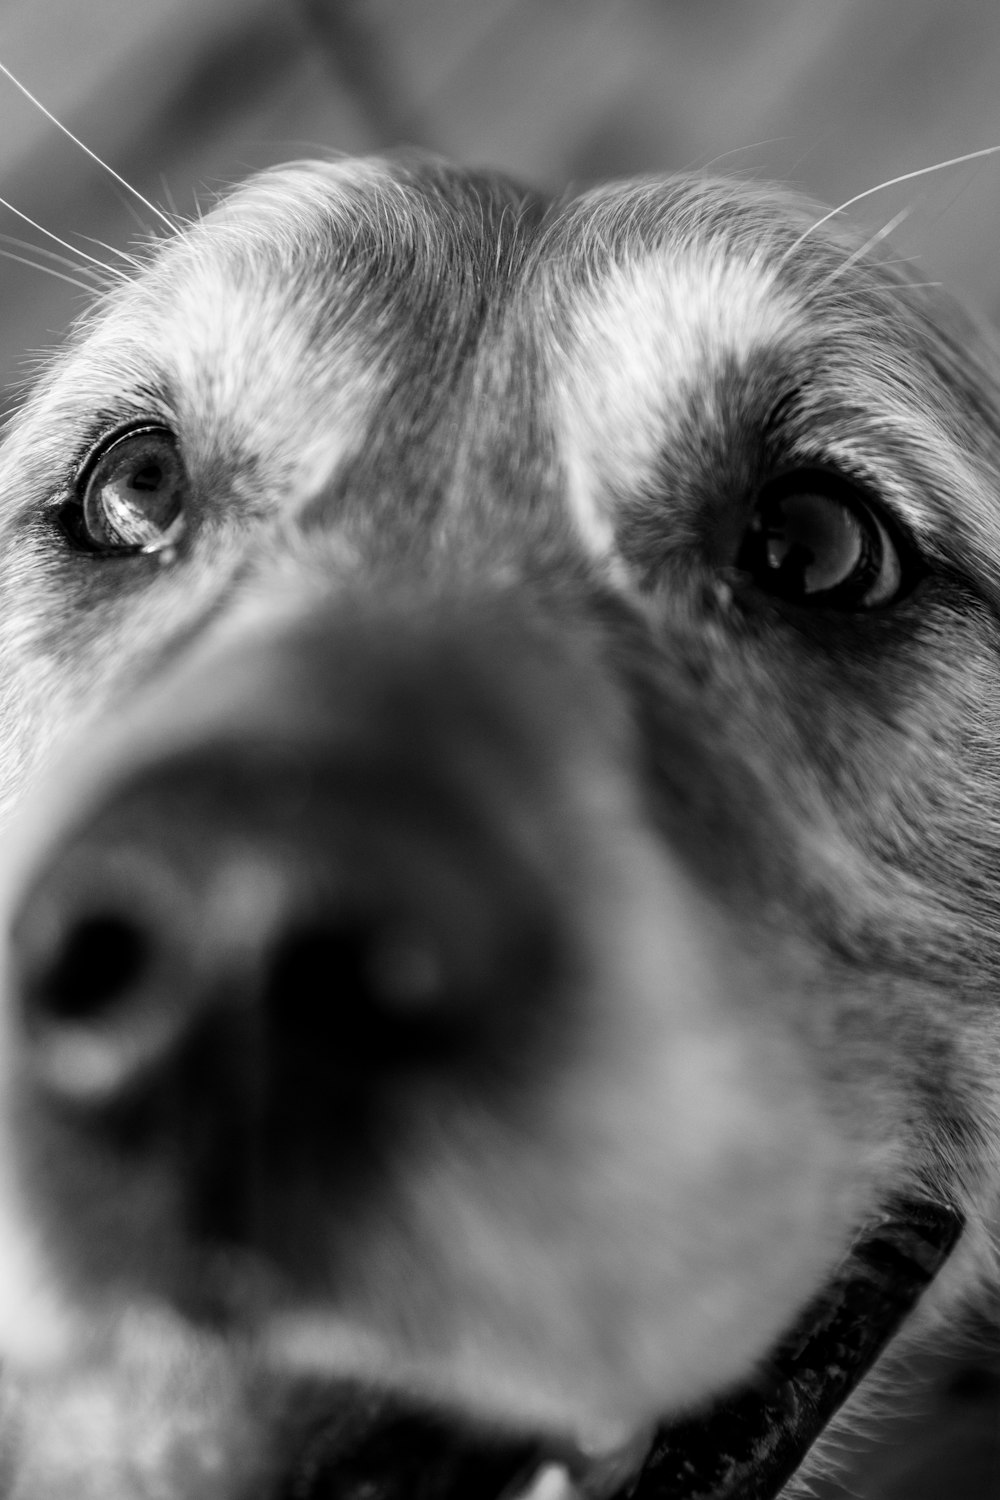 grayscale photo of dogs eye